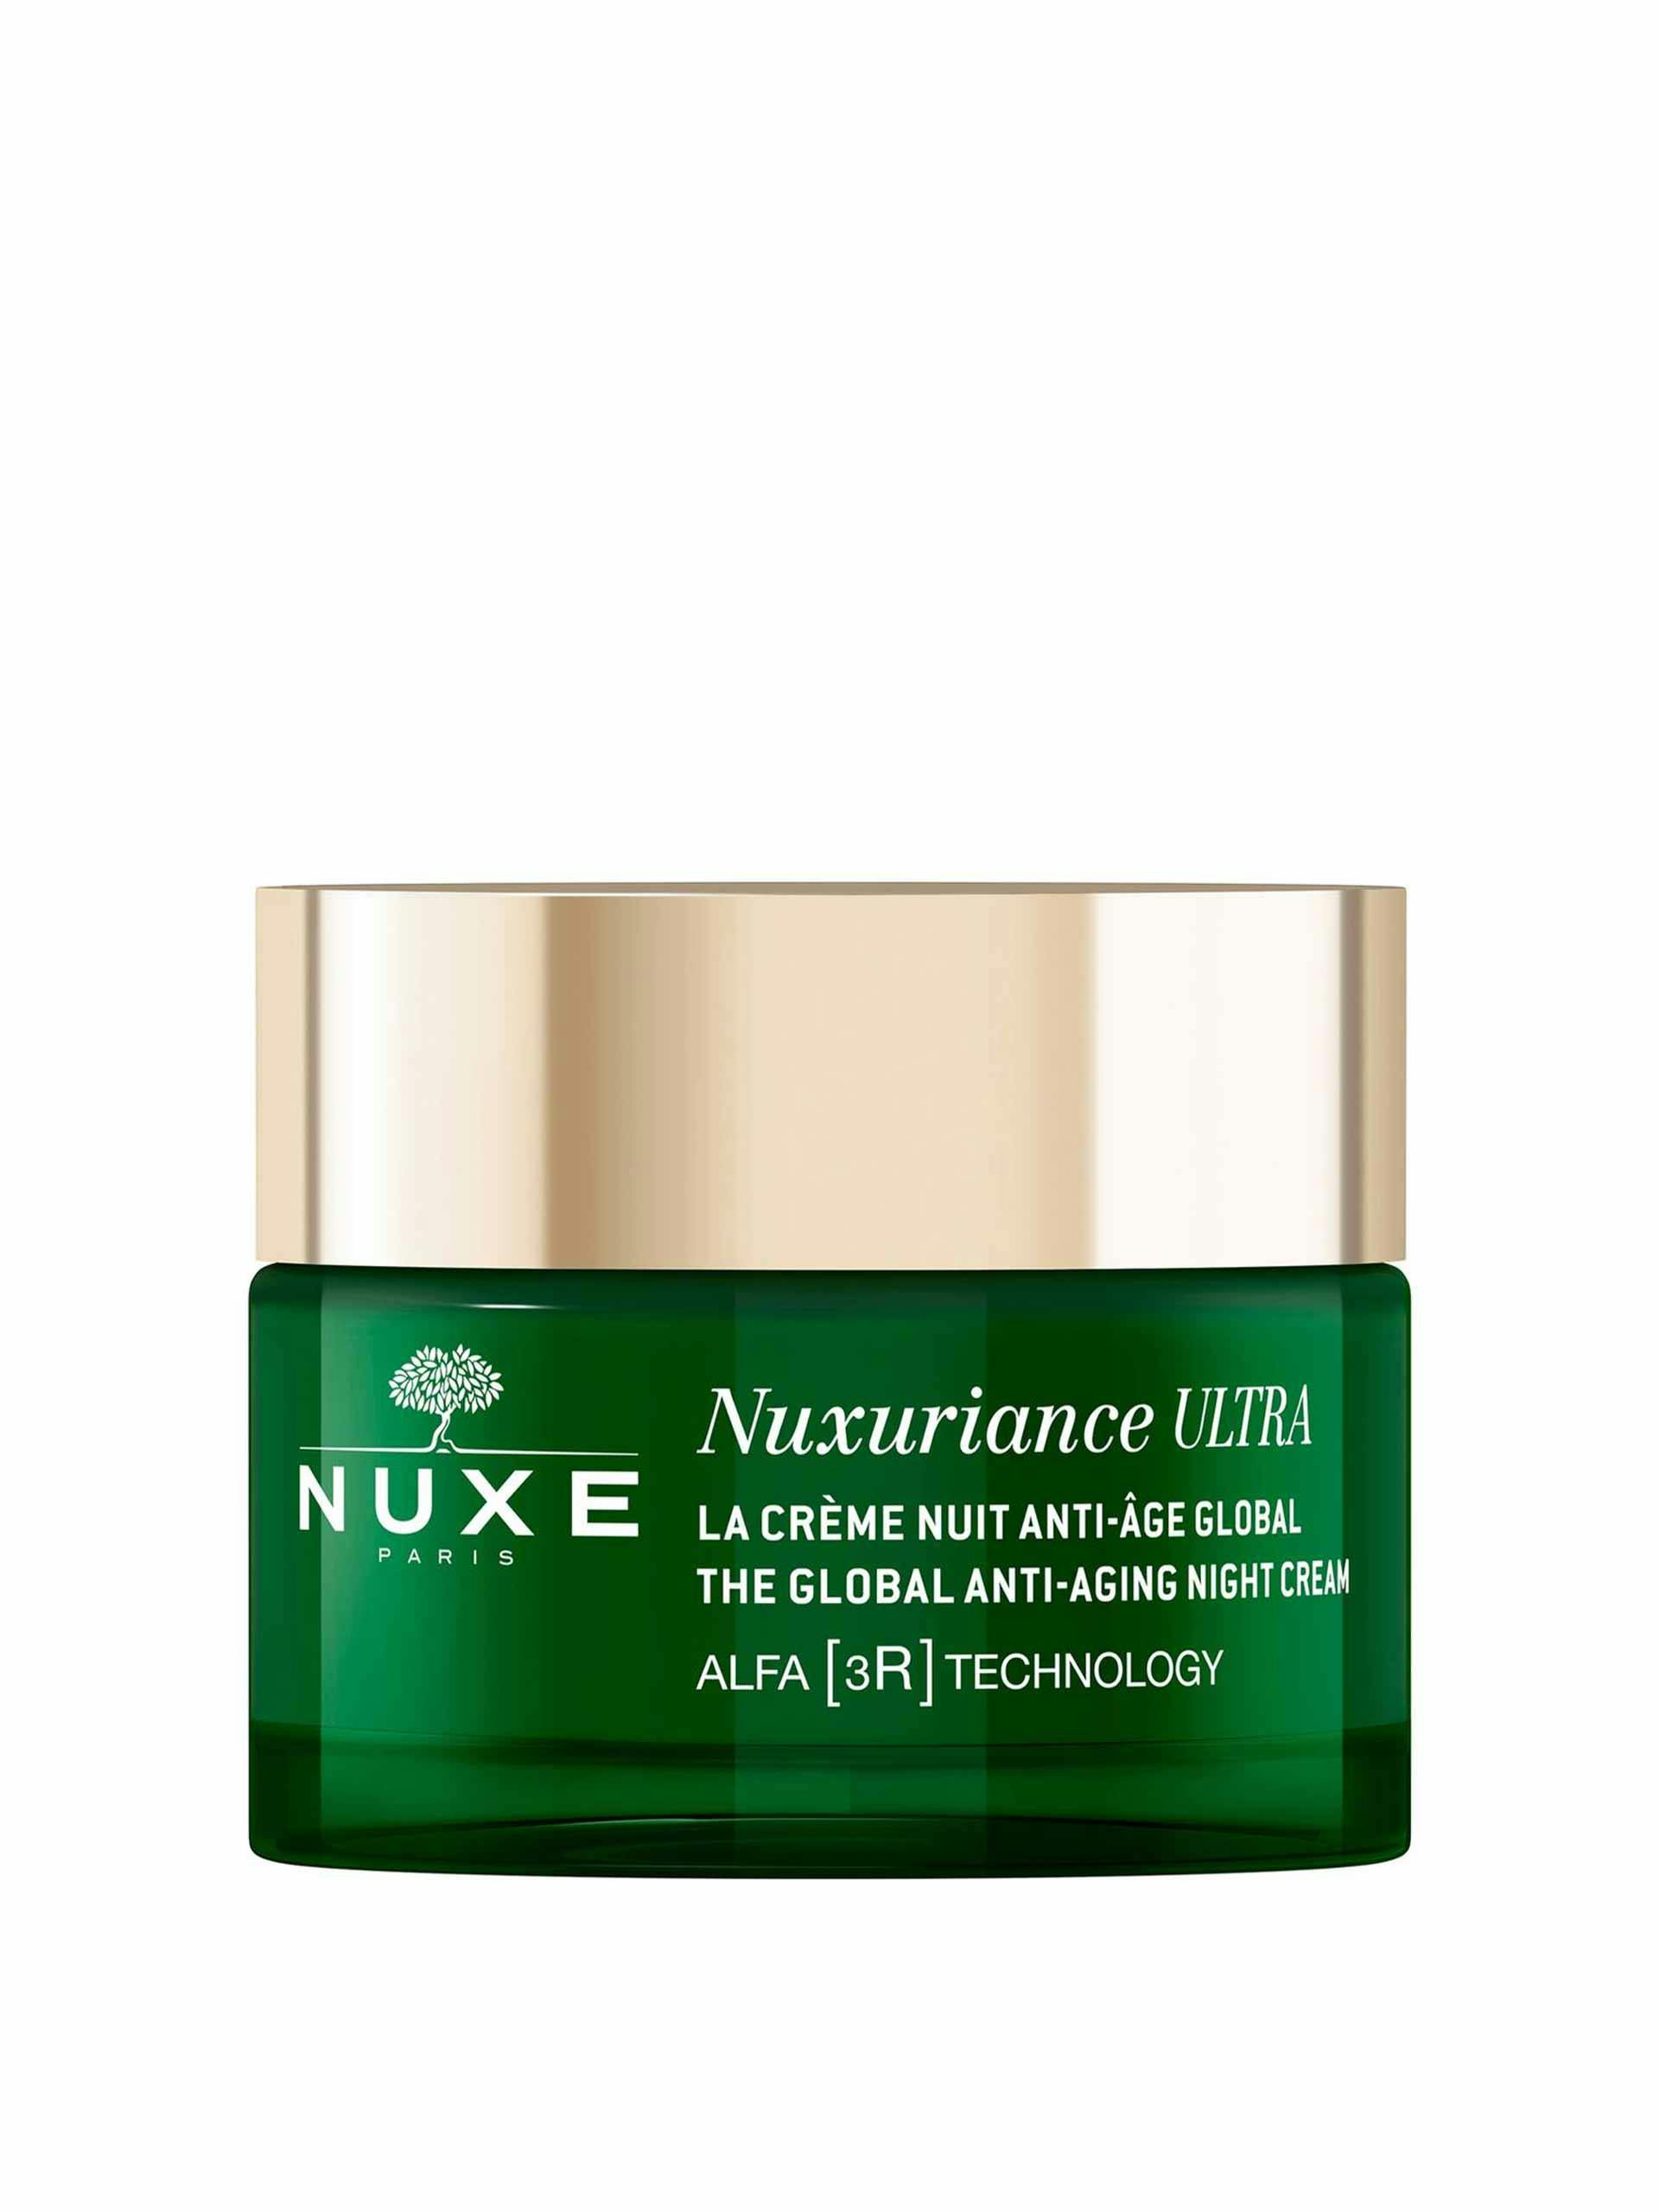 Nuxuriance Ultra anti-aging night cream